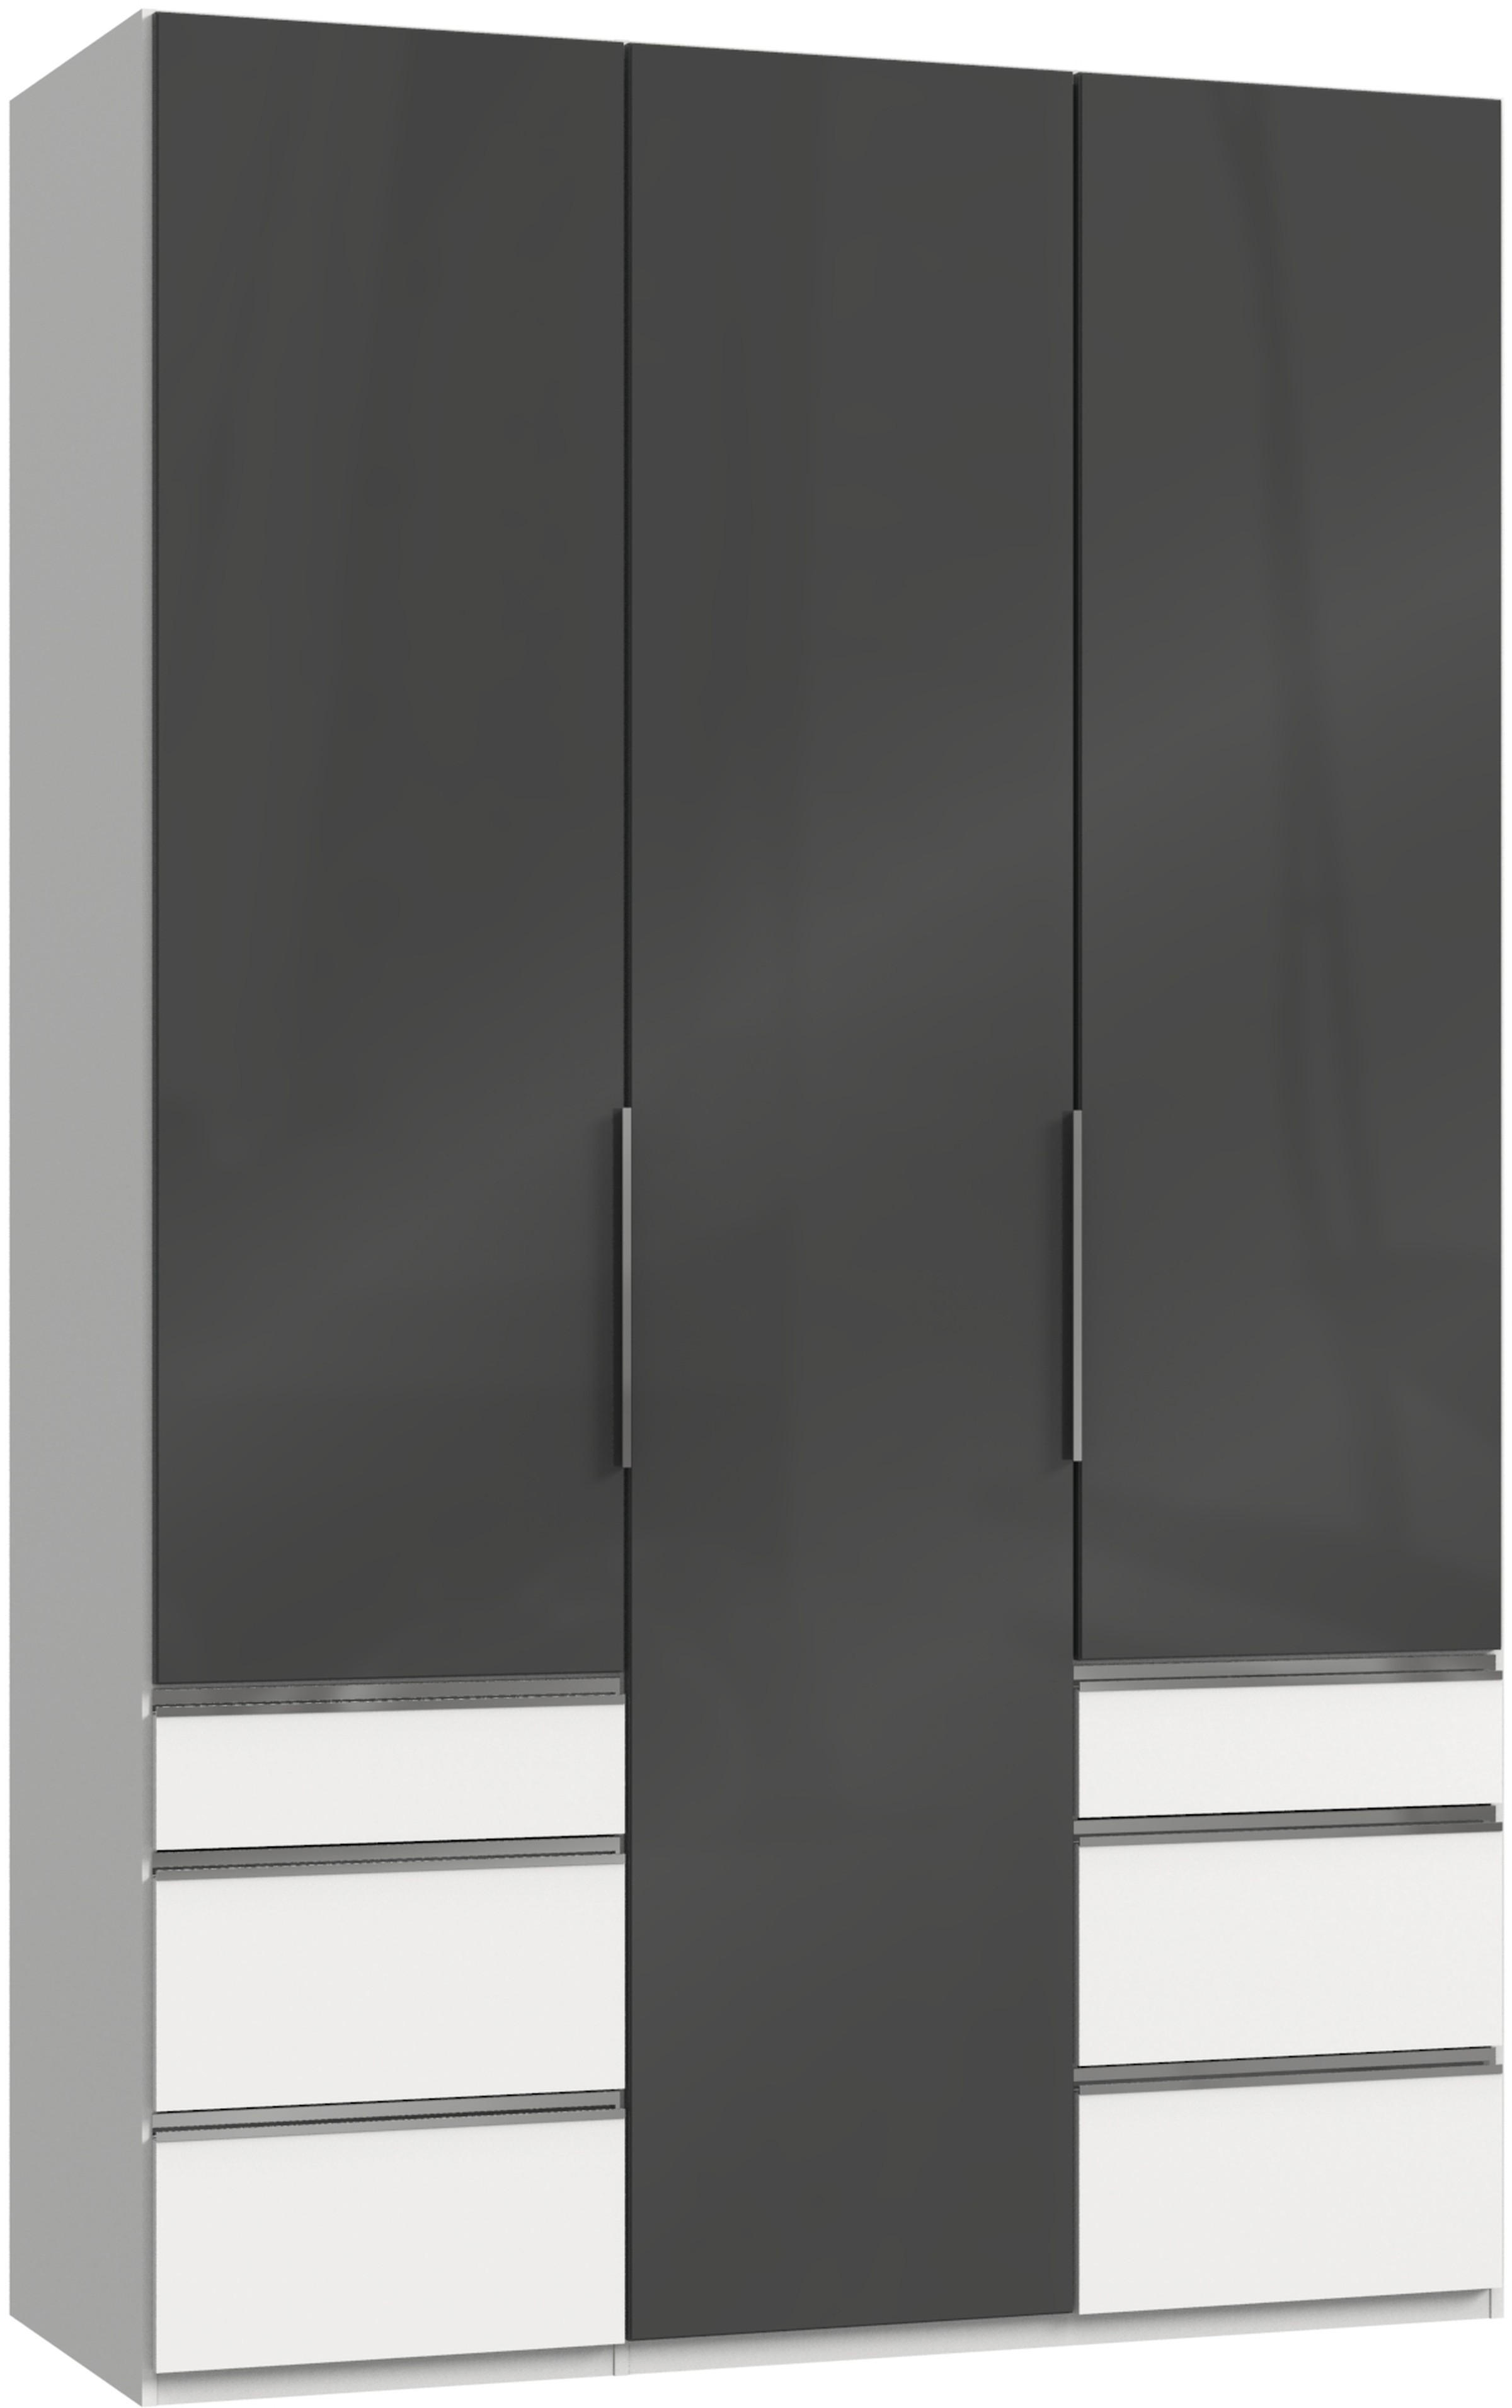 DREHTÜRENSCHRANK 3-türig Grau, Weiß  - Chromfarben/Weiß, MODERN, Glas/Holzwerkstoff (150/236/58cm) - MID.YOU